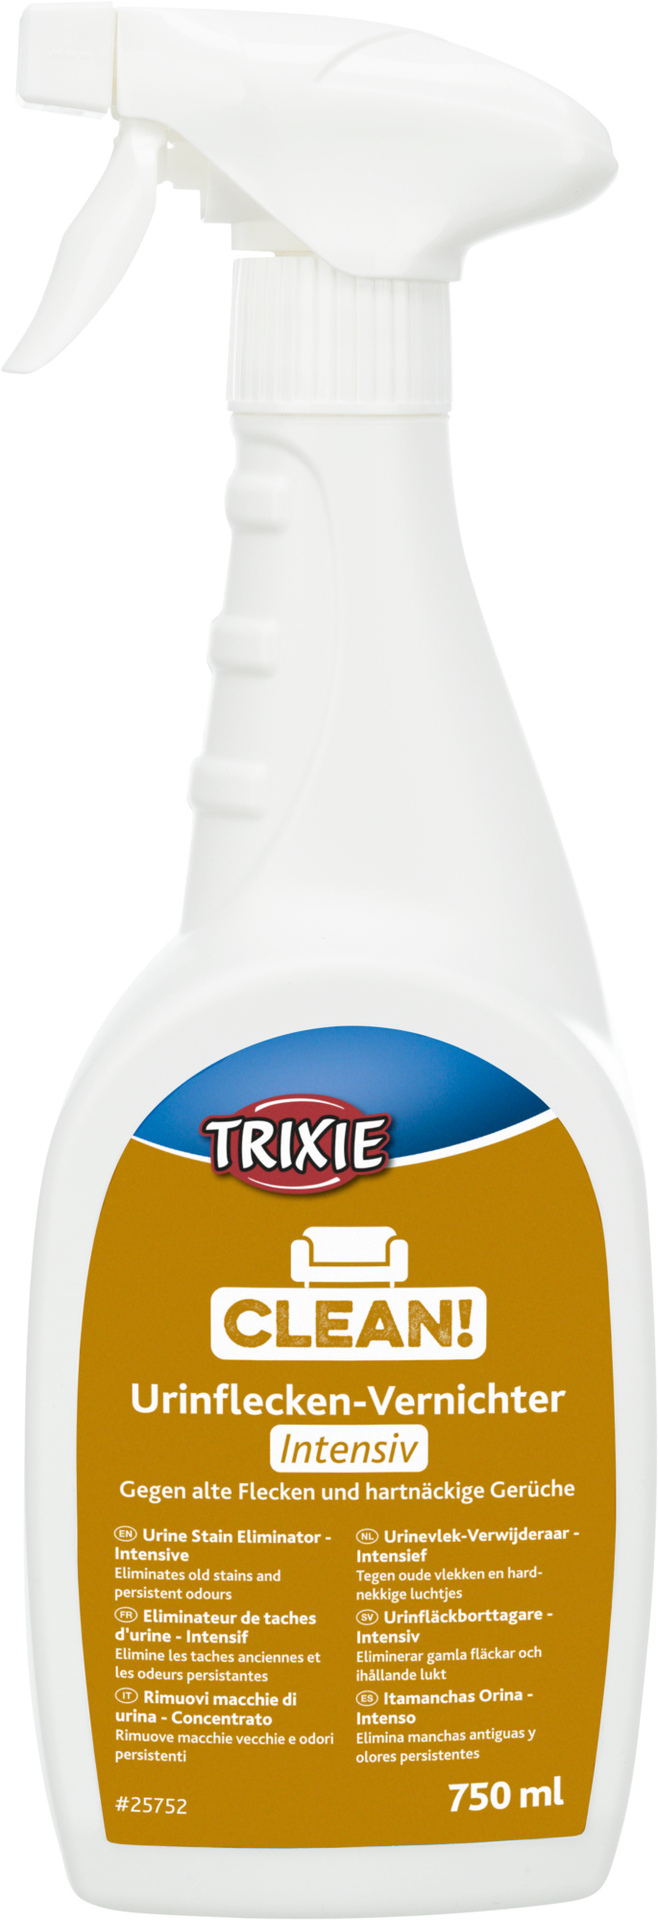 Trixie Heimtierbedarf Urinflecken-Vernichter Intensiv